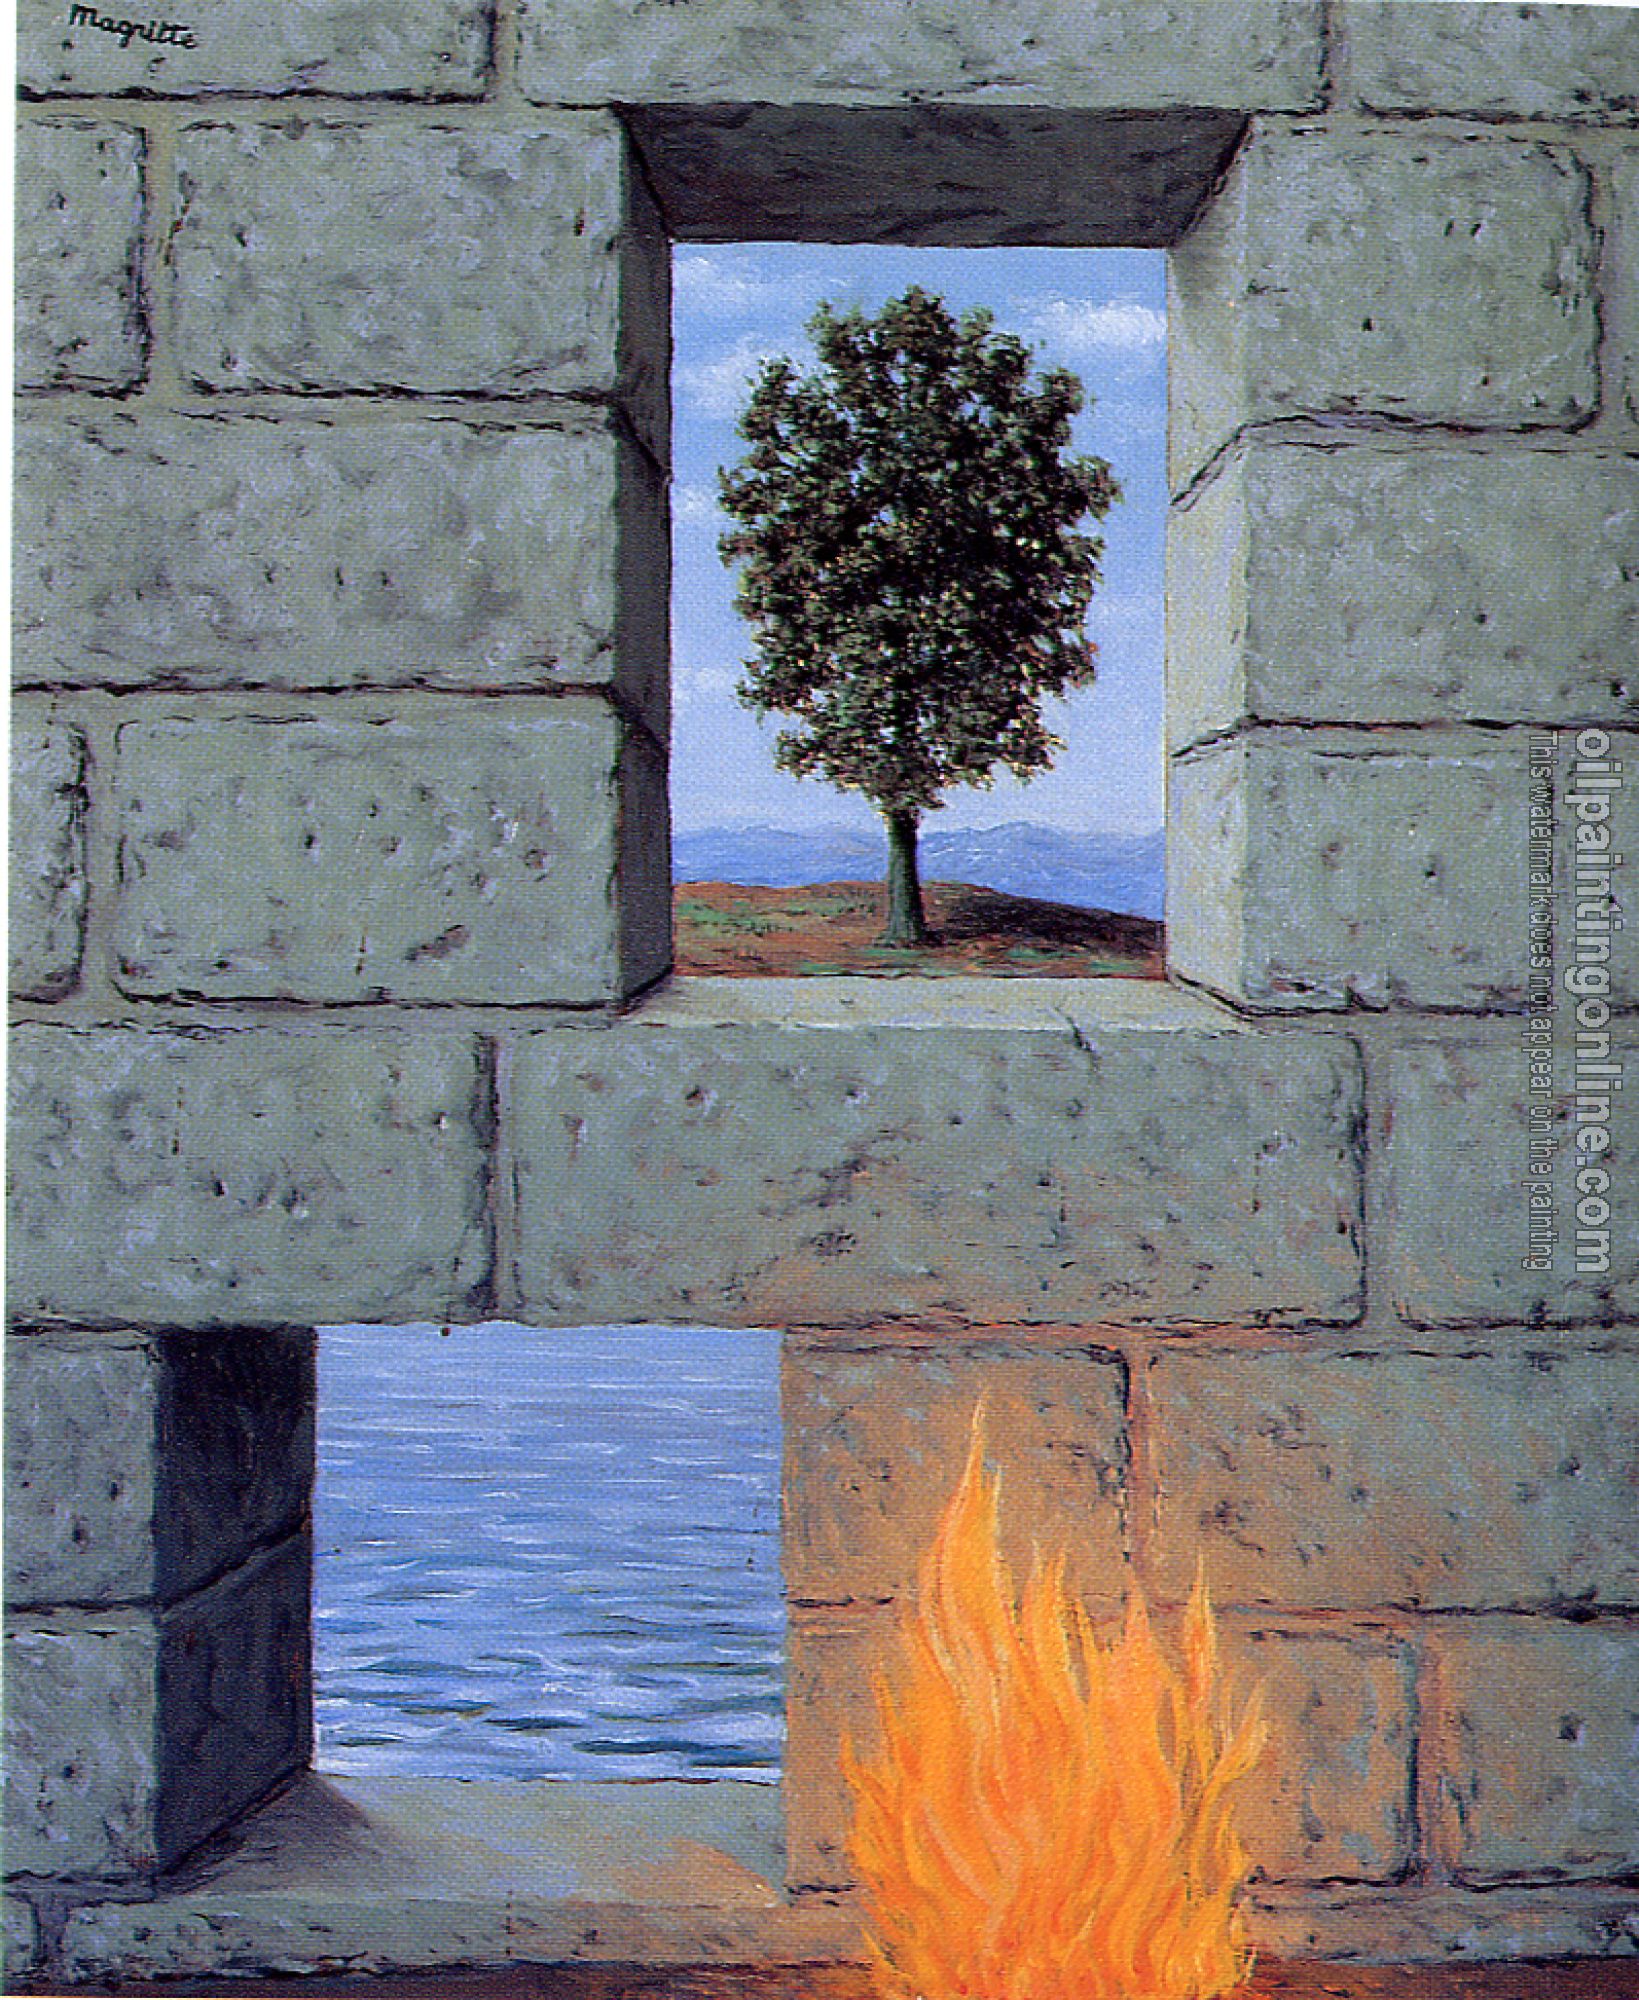 Magritte, Rene - mental complacency